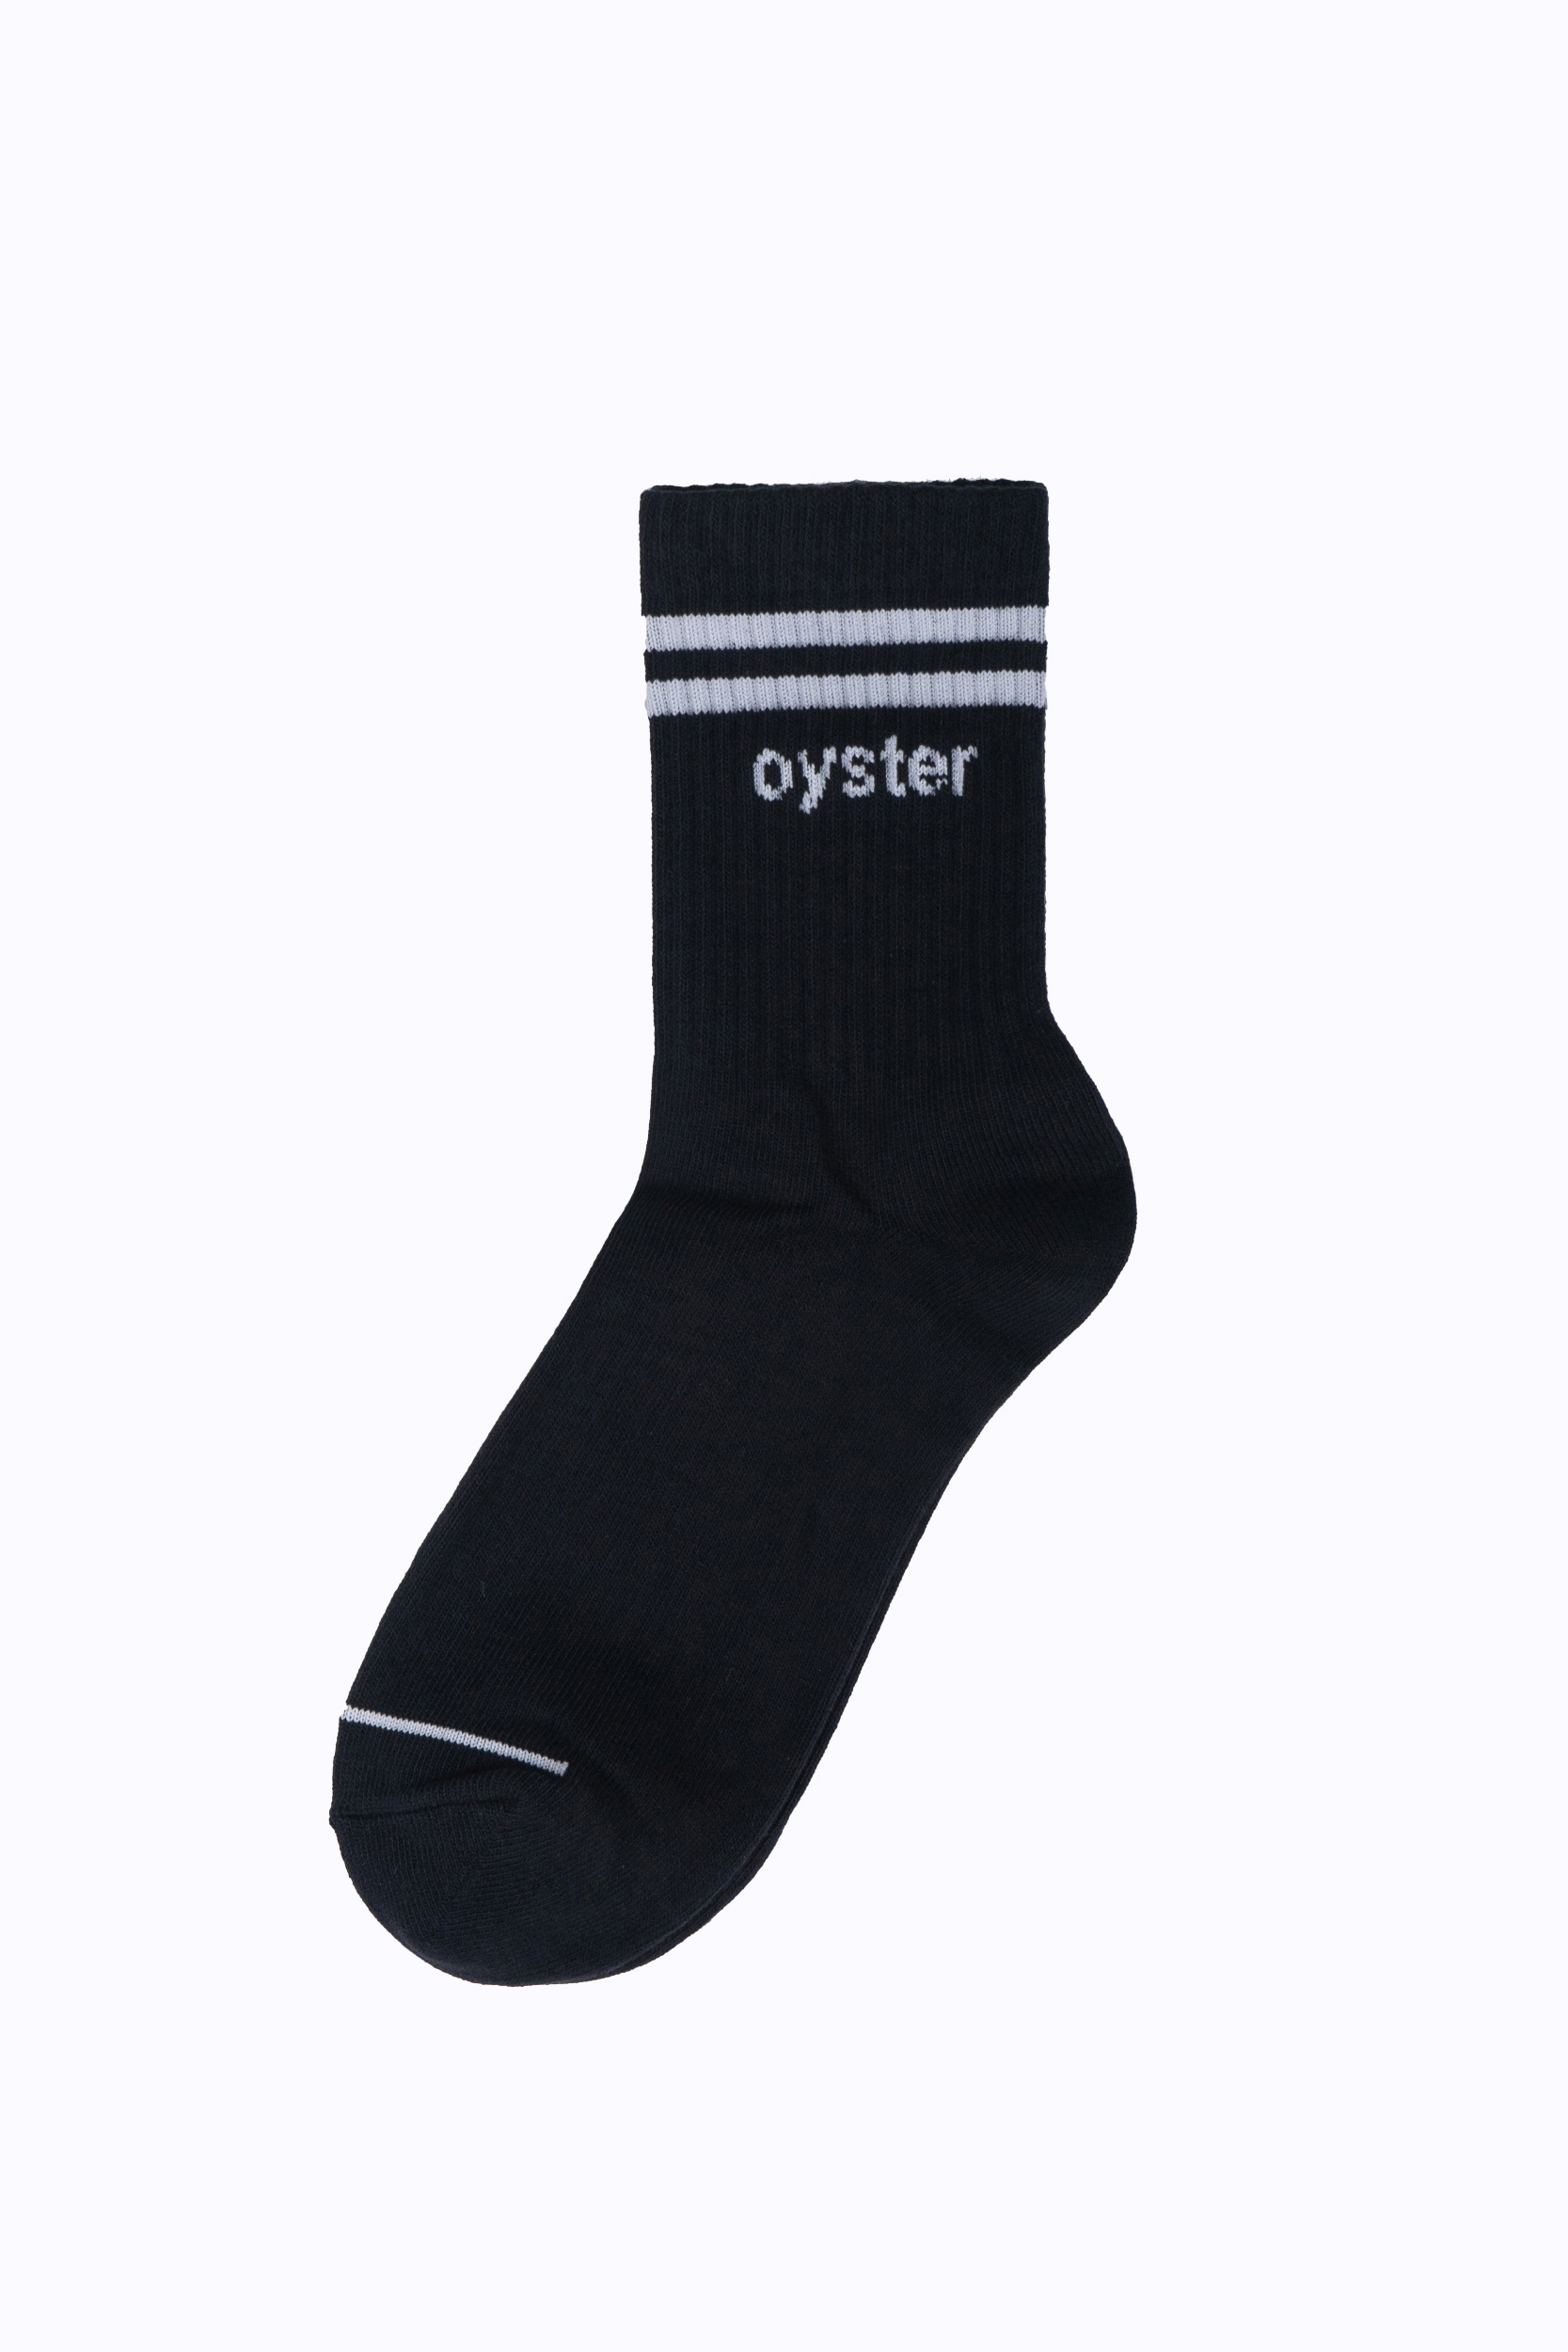 Oyster socks_Black